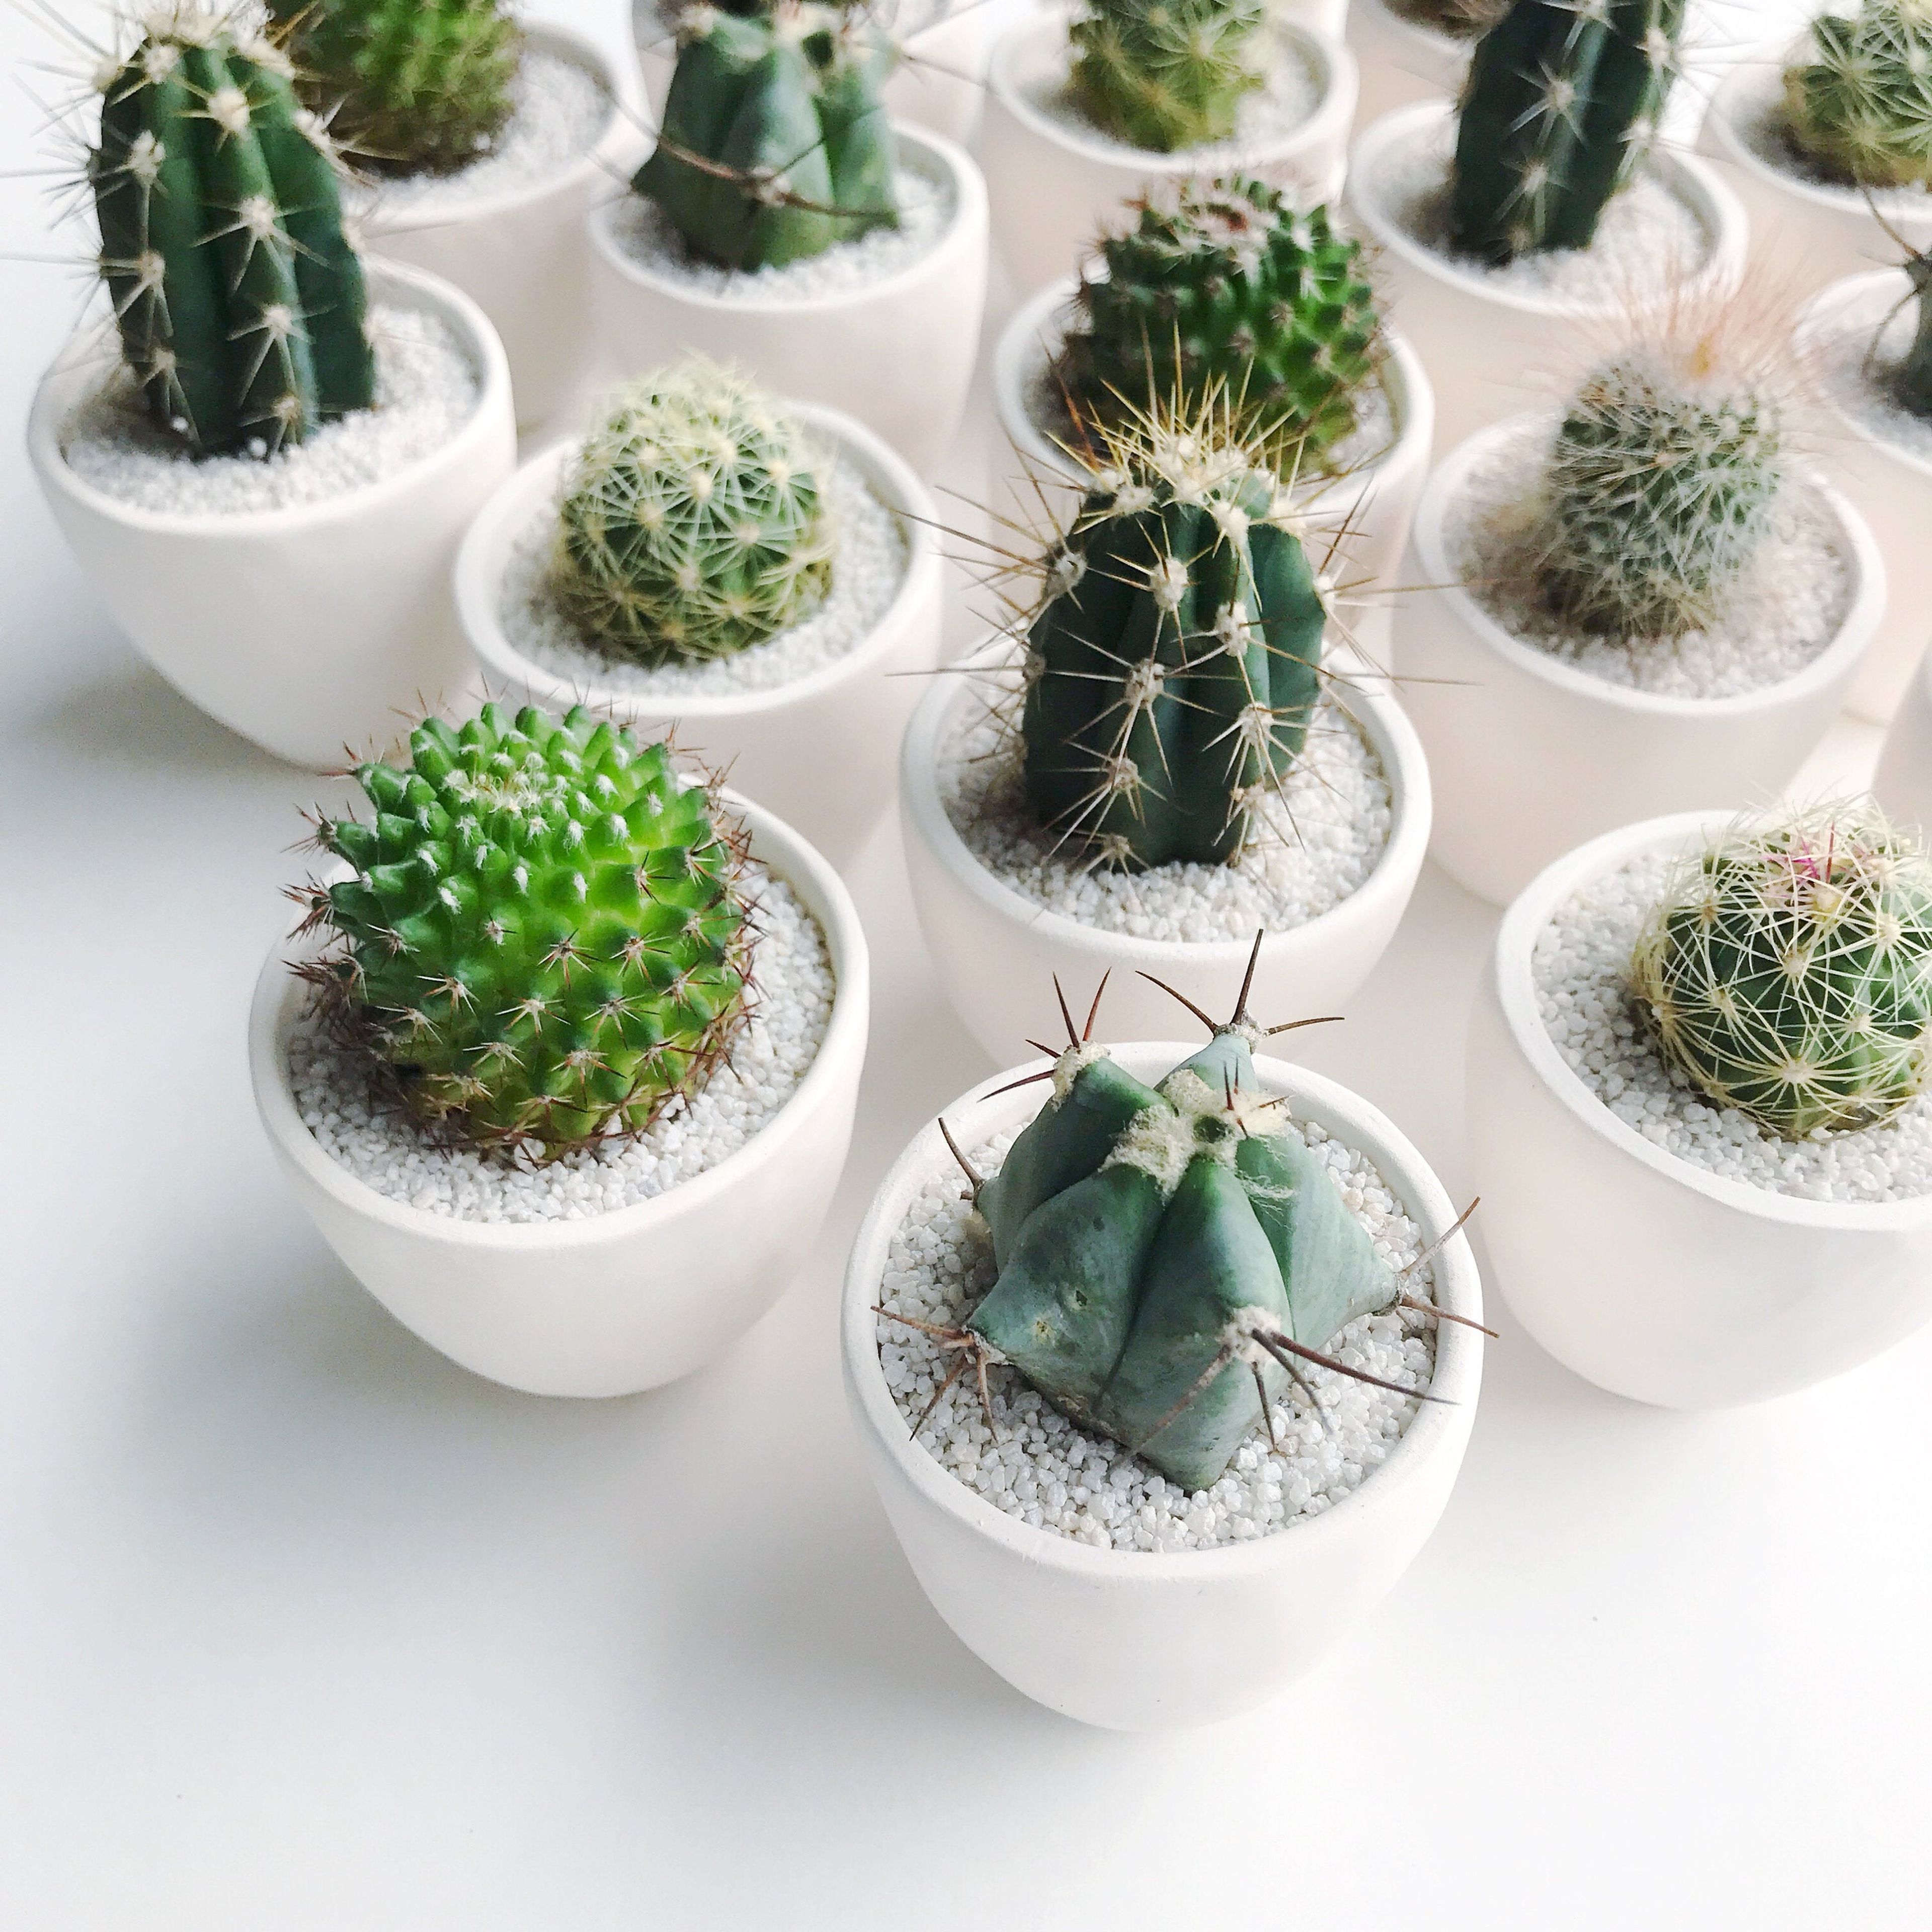 SURPRISE! Small Cactus Plant Kit